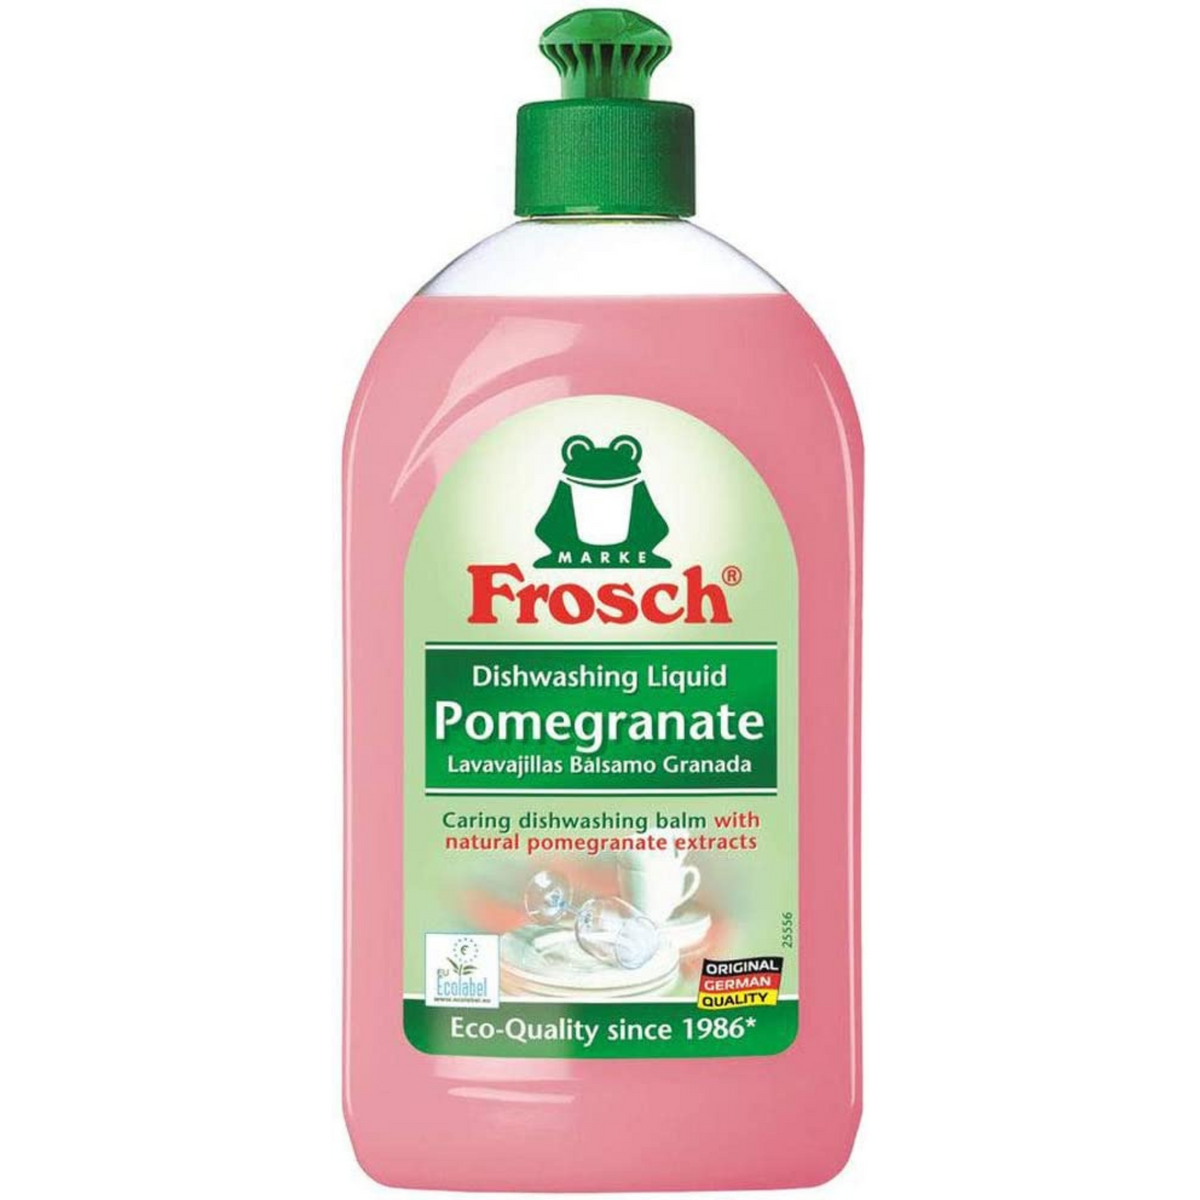 Primary Image of Frosch Pomegranate Liquid Dish Soap (500 ml) 